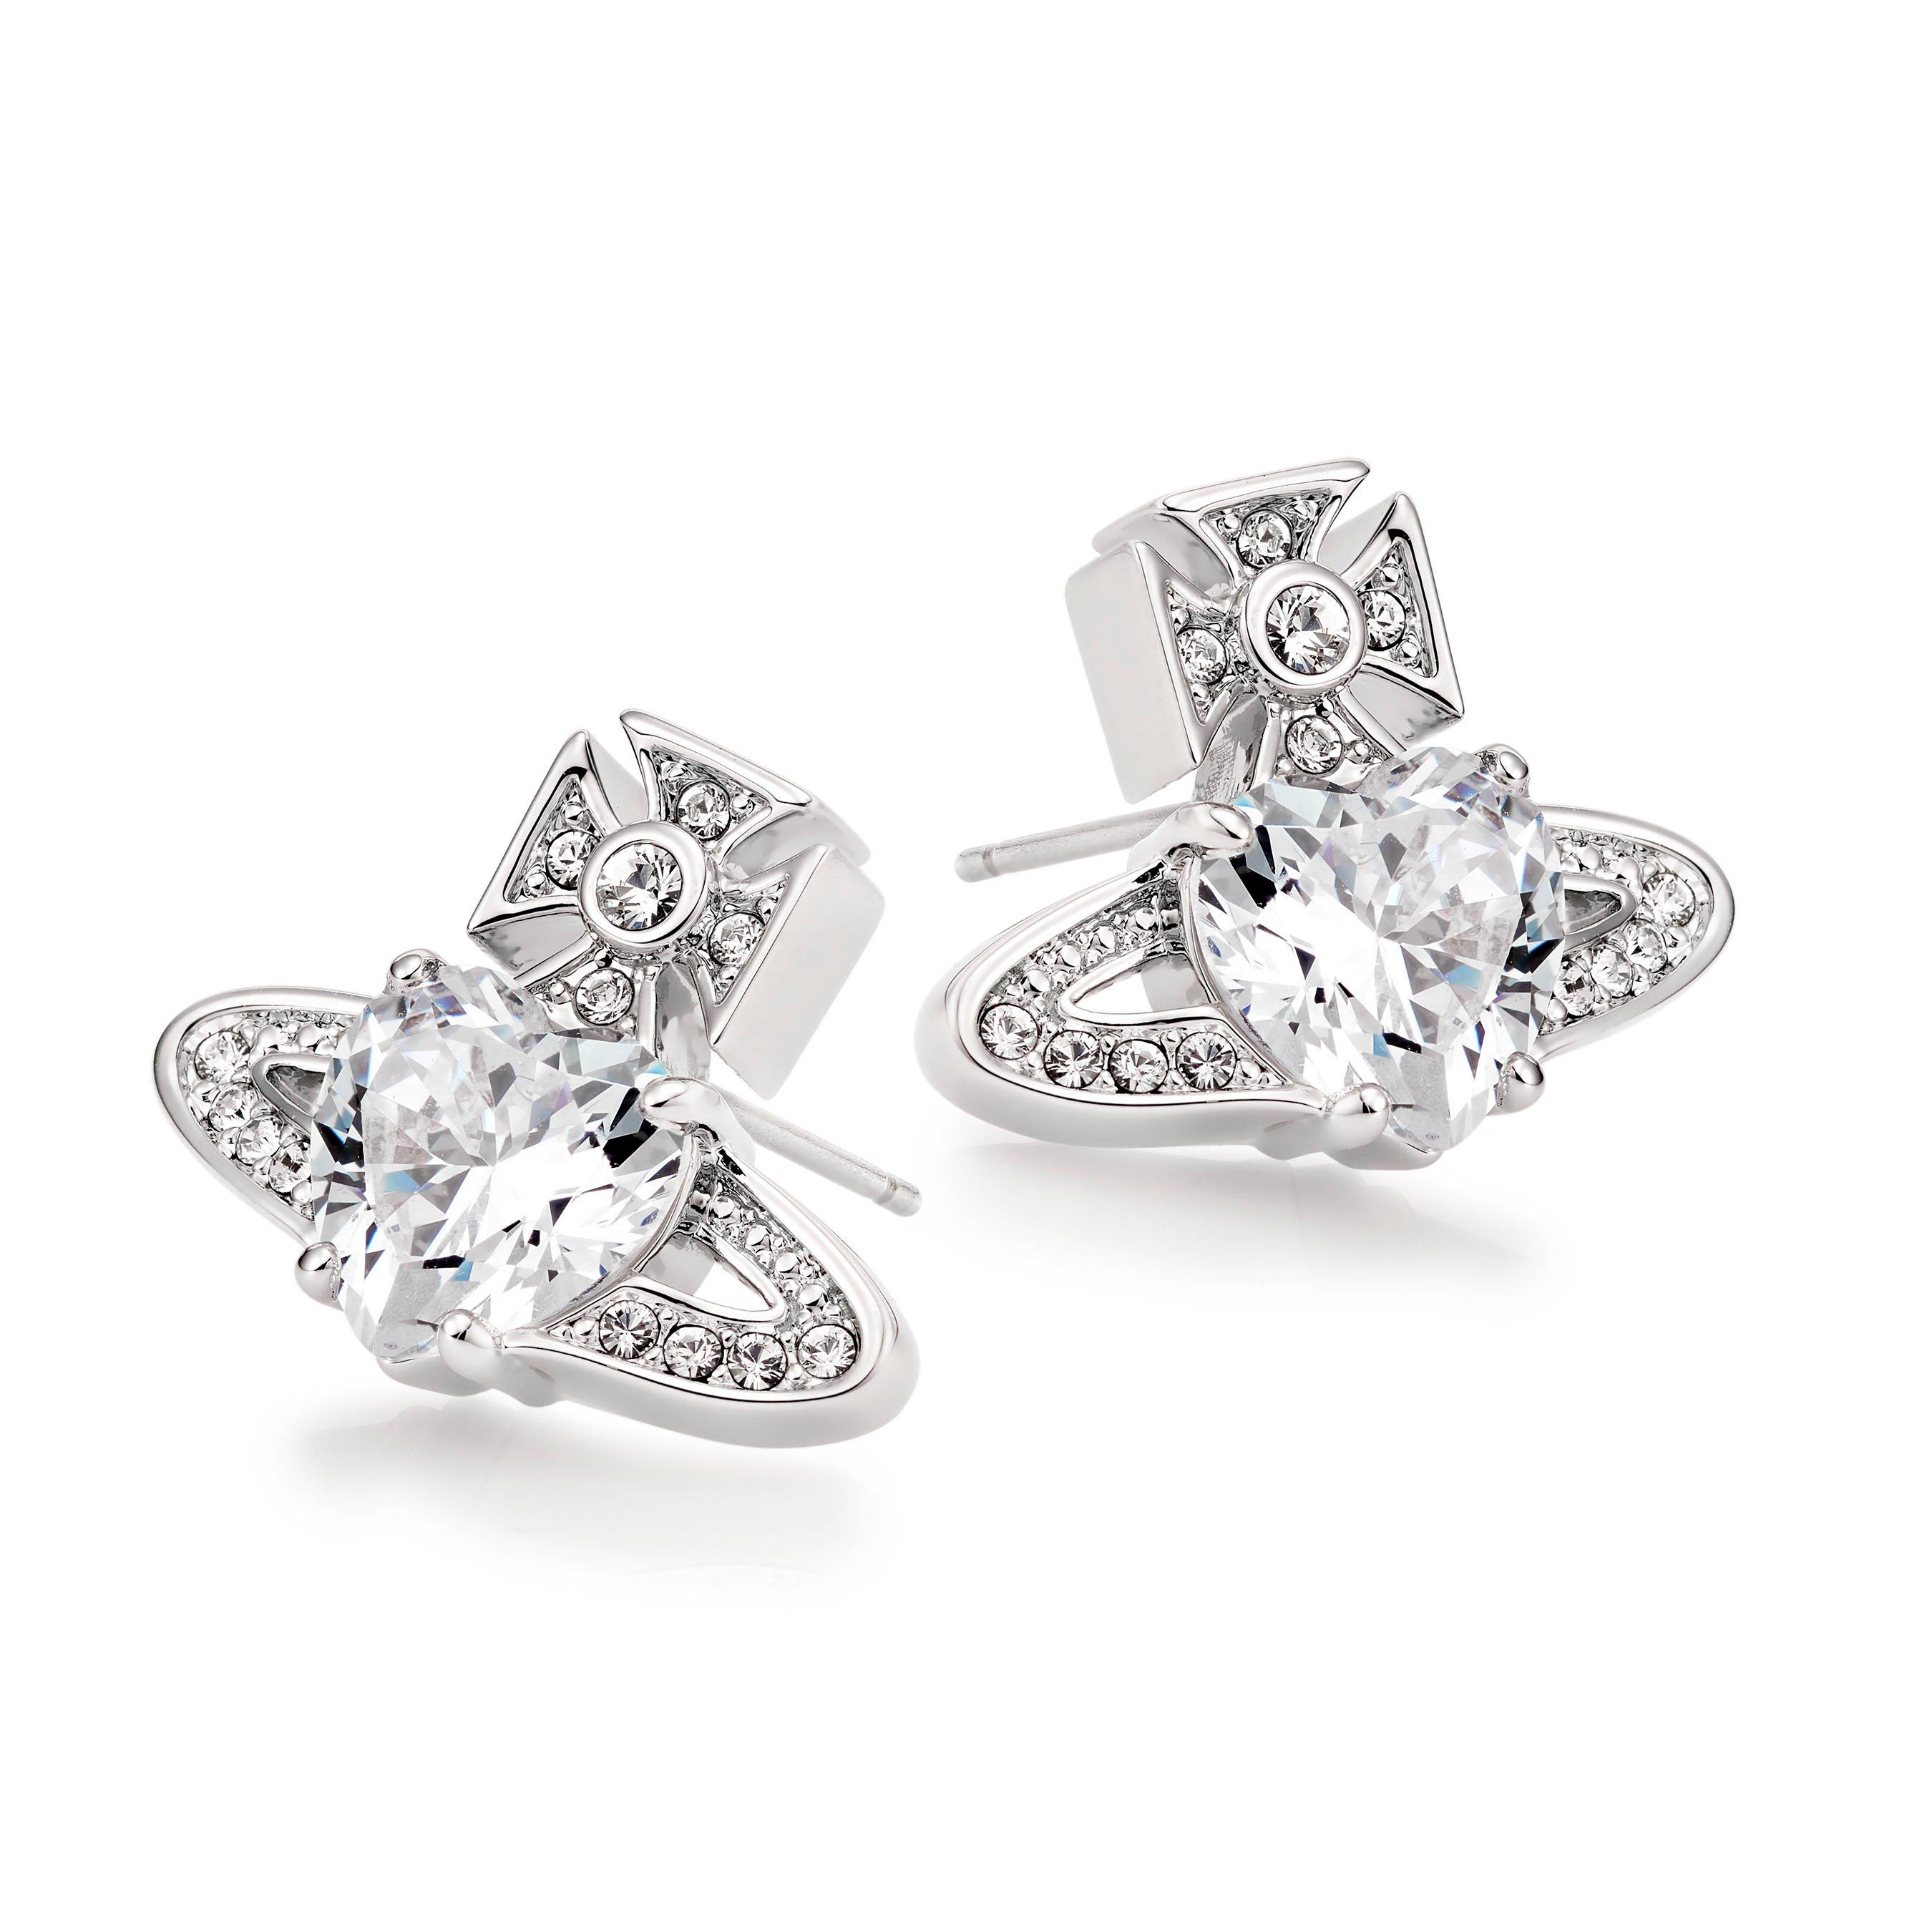 Vivienne Westwood Ariella Stud Earrings | 0129991 | Beaverbrooks the ...